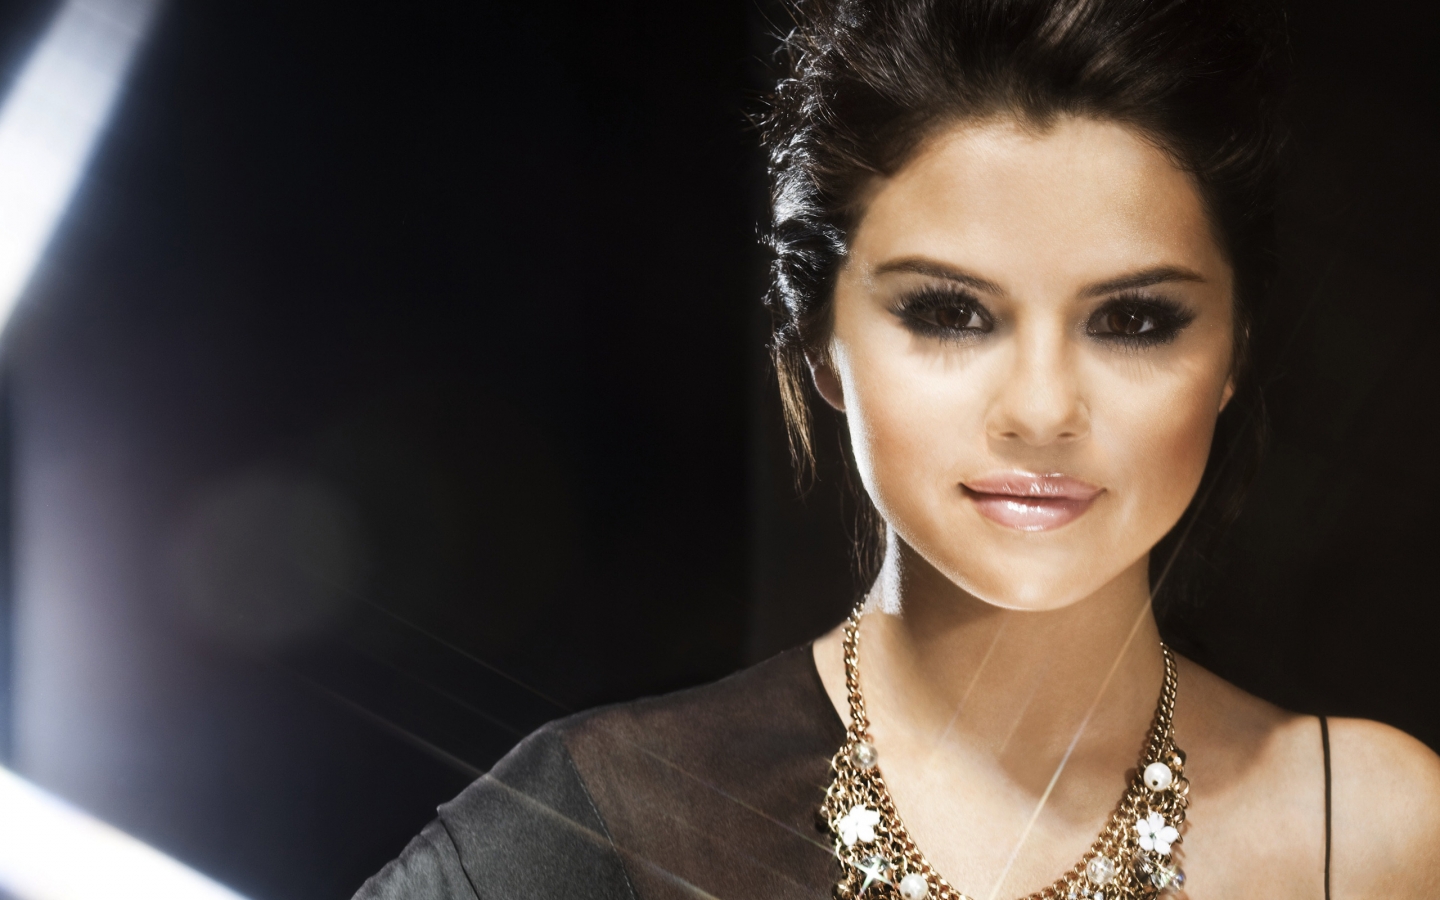 Beautiful Selena Gomez for 1440 x 900 widescreen resolution